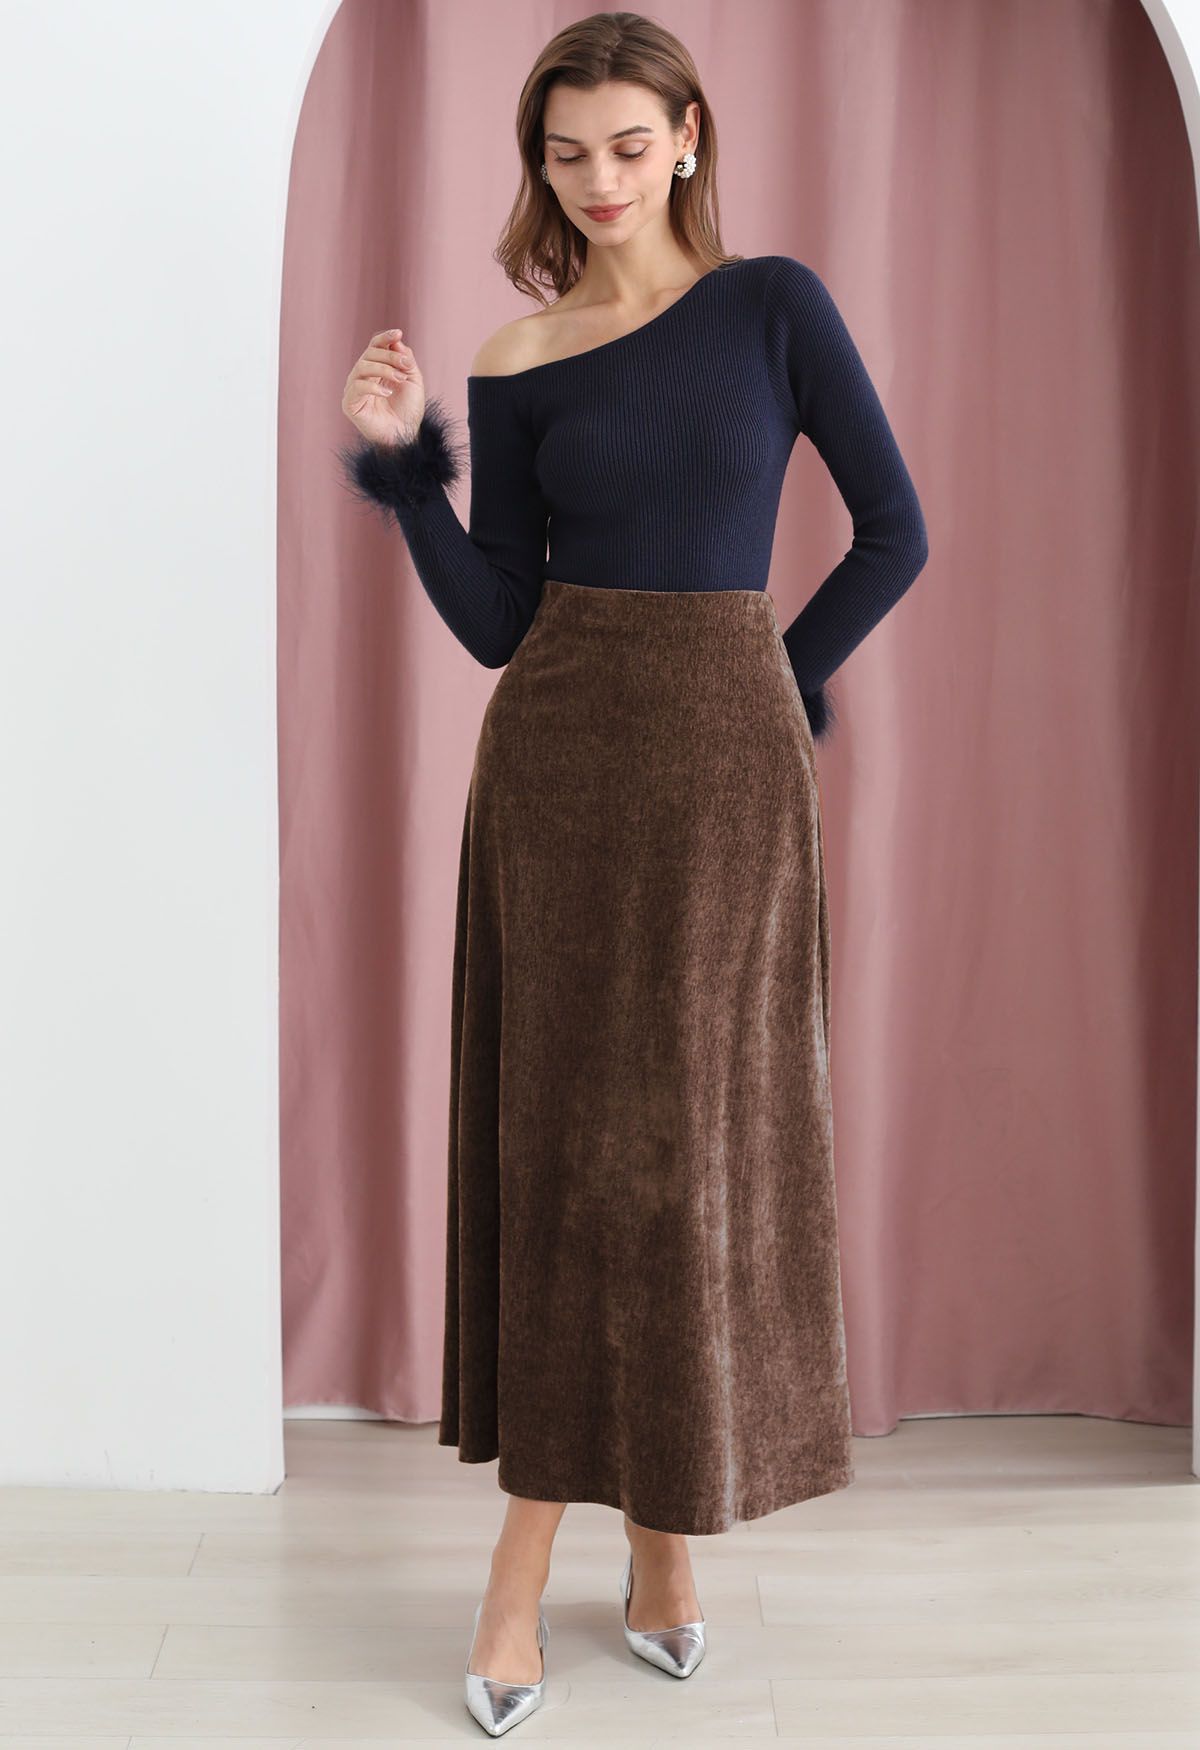 Falda larga de terciopelo Midnight Glamour en marrón